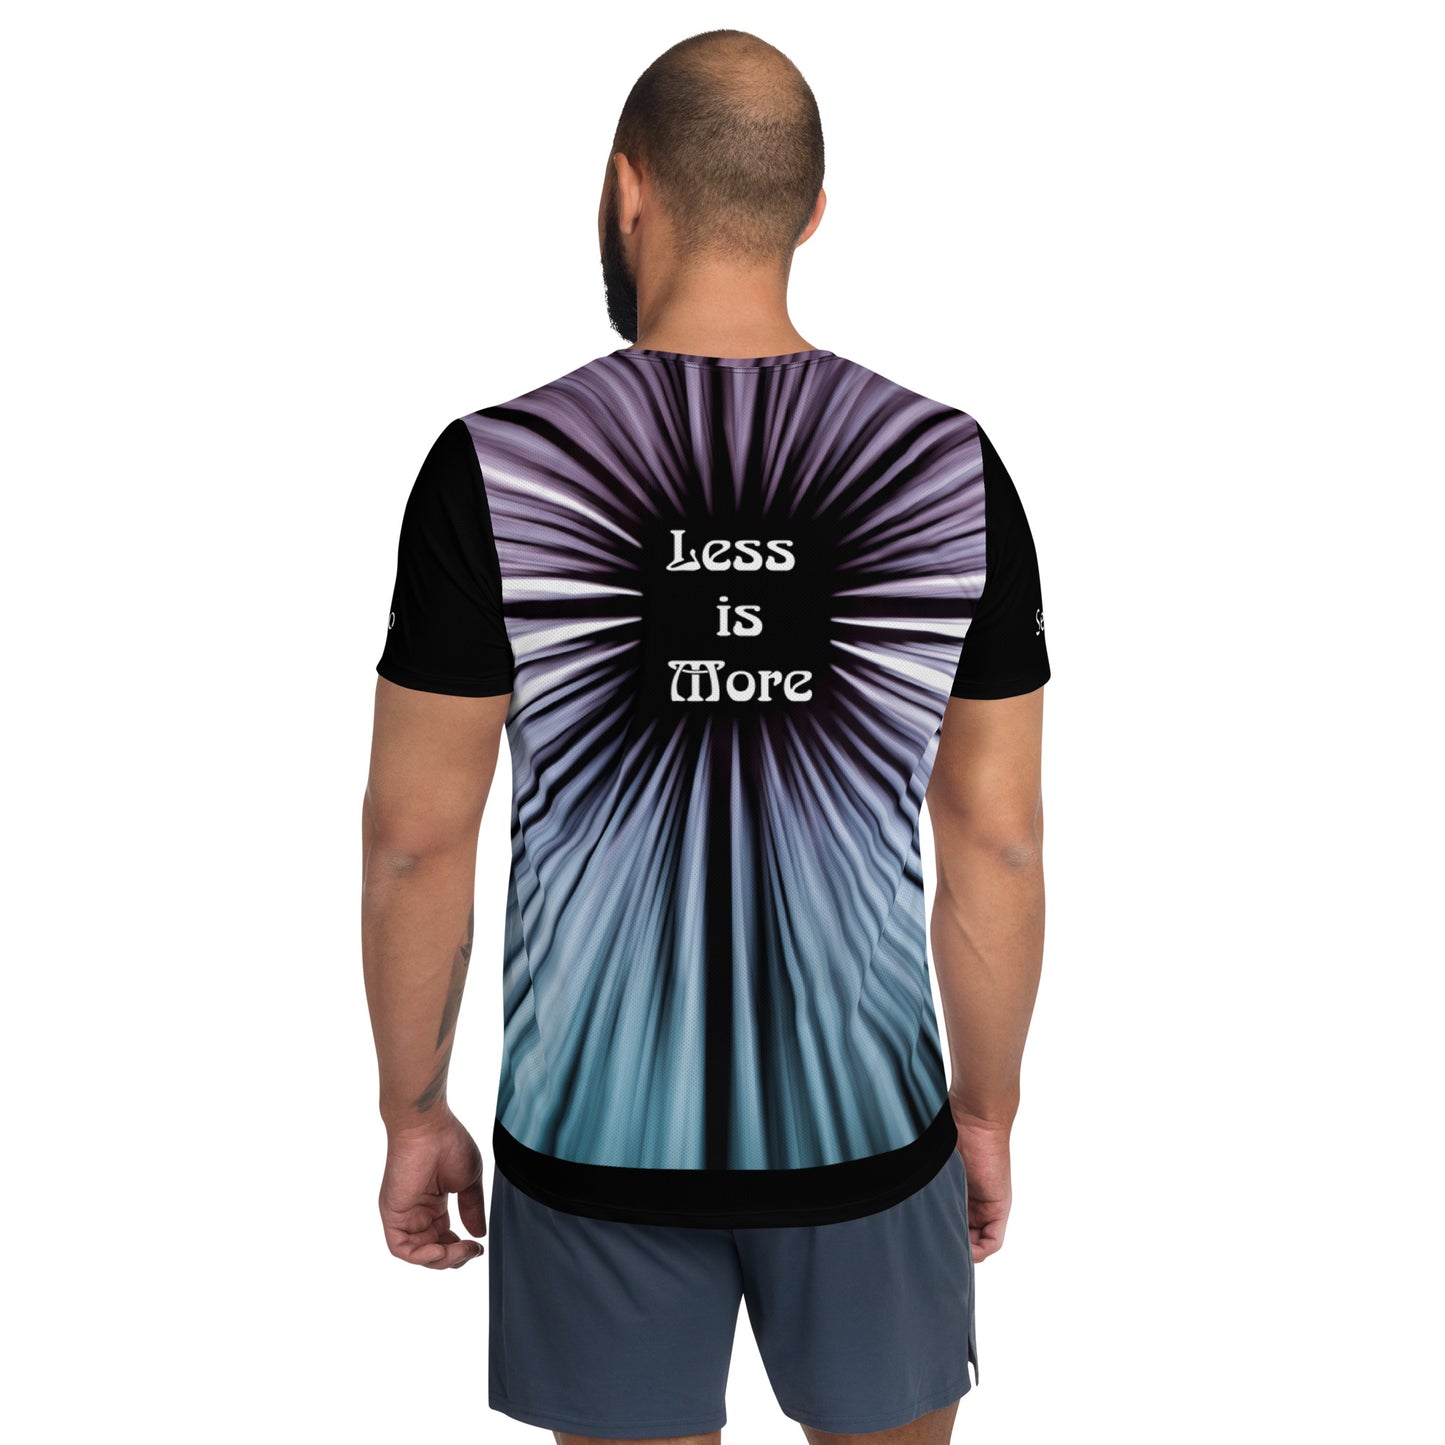 Less is More  Men's Athletic T-shirt